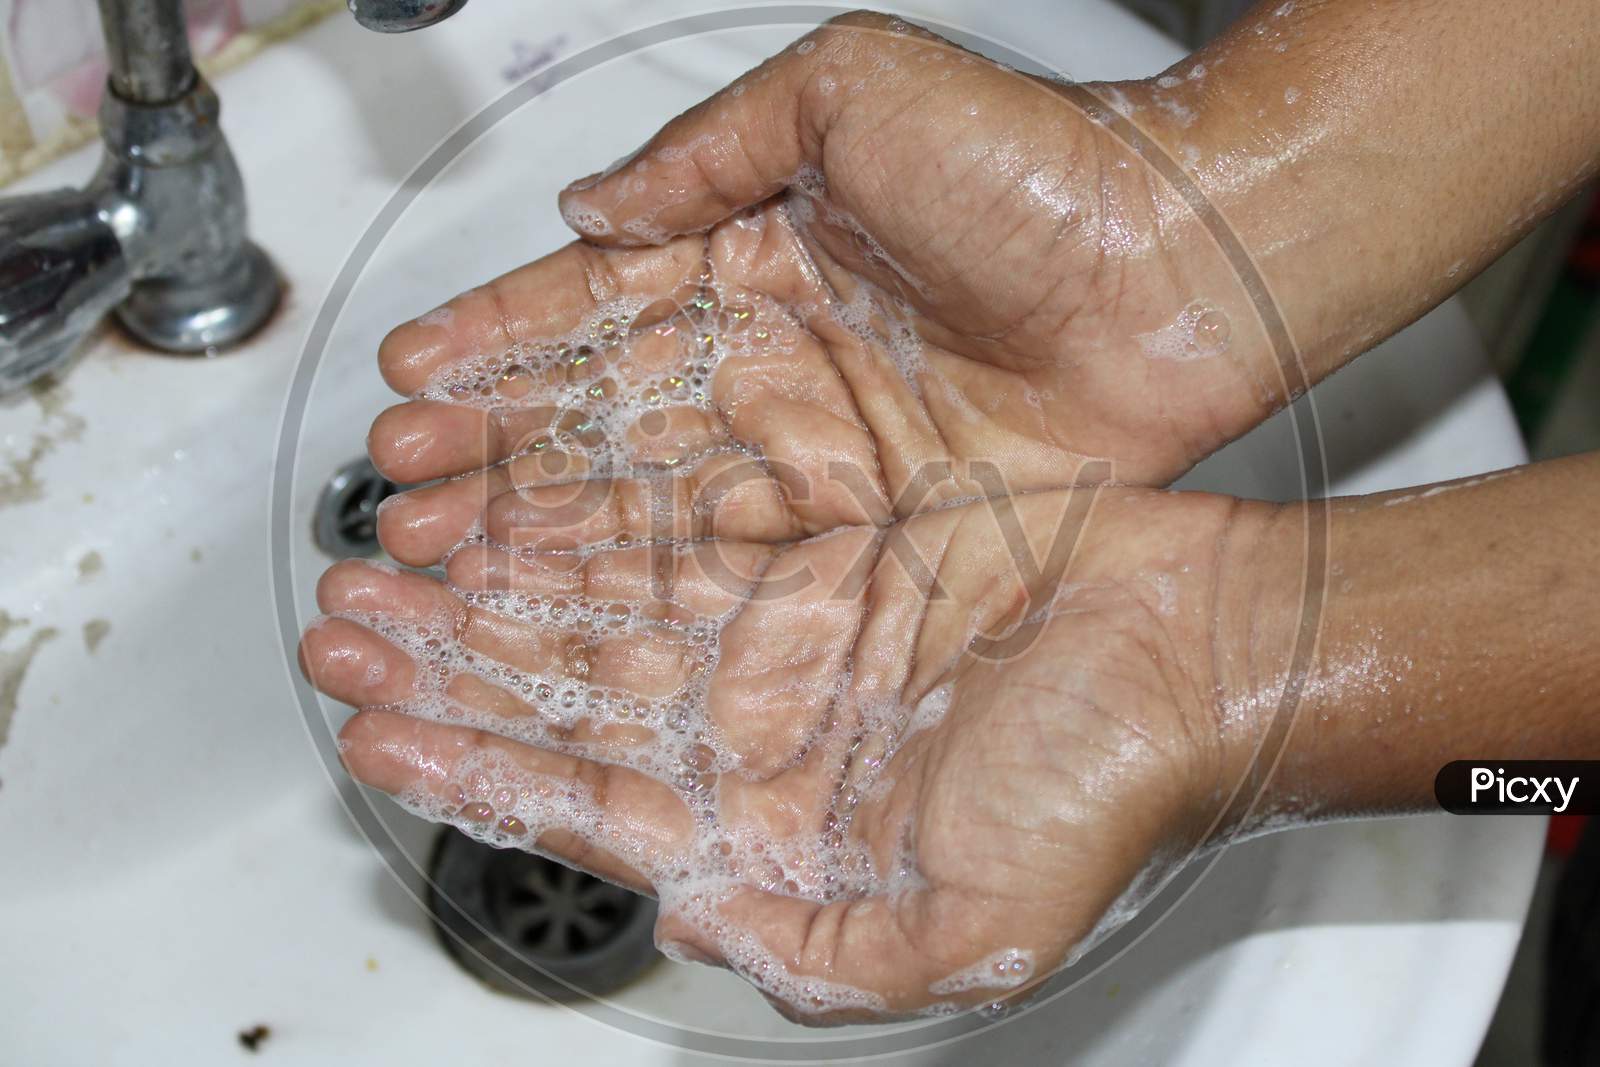 Wash your hand for safe corona virus